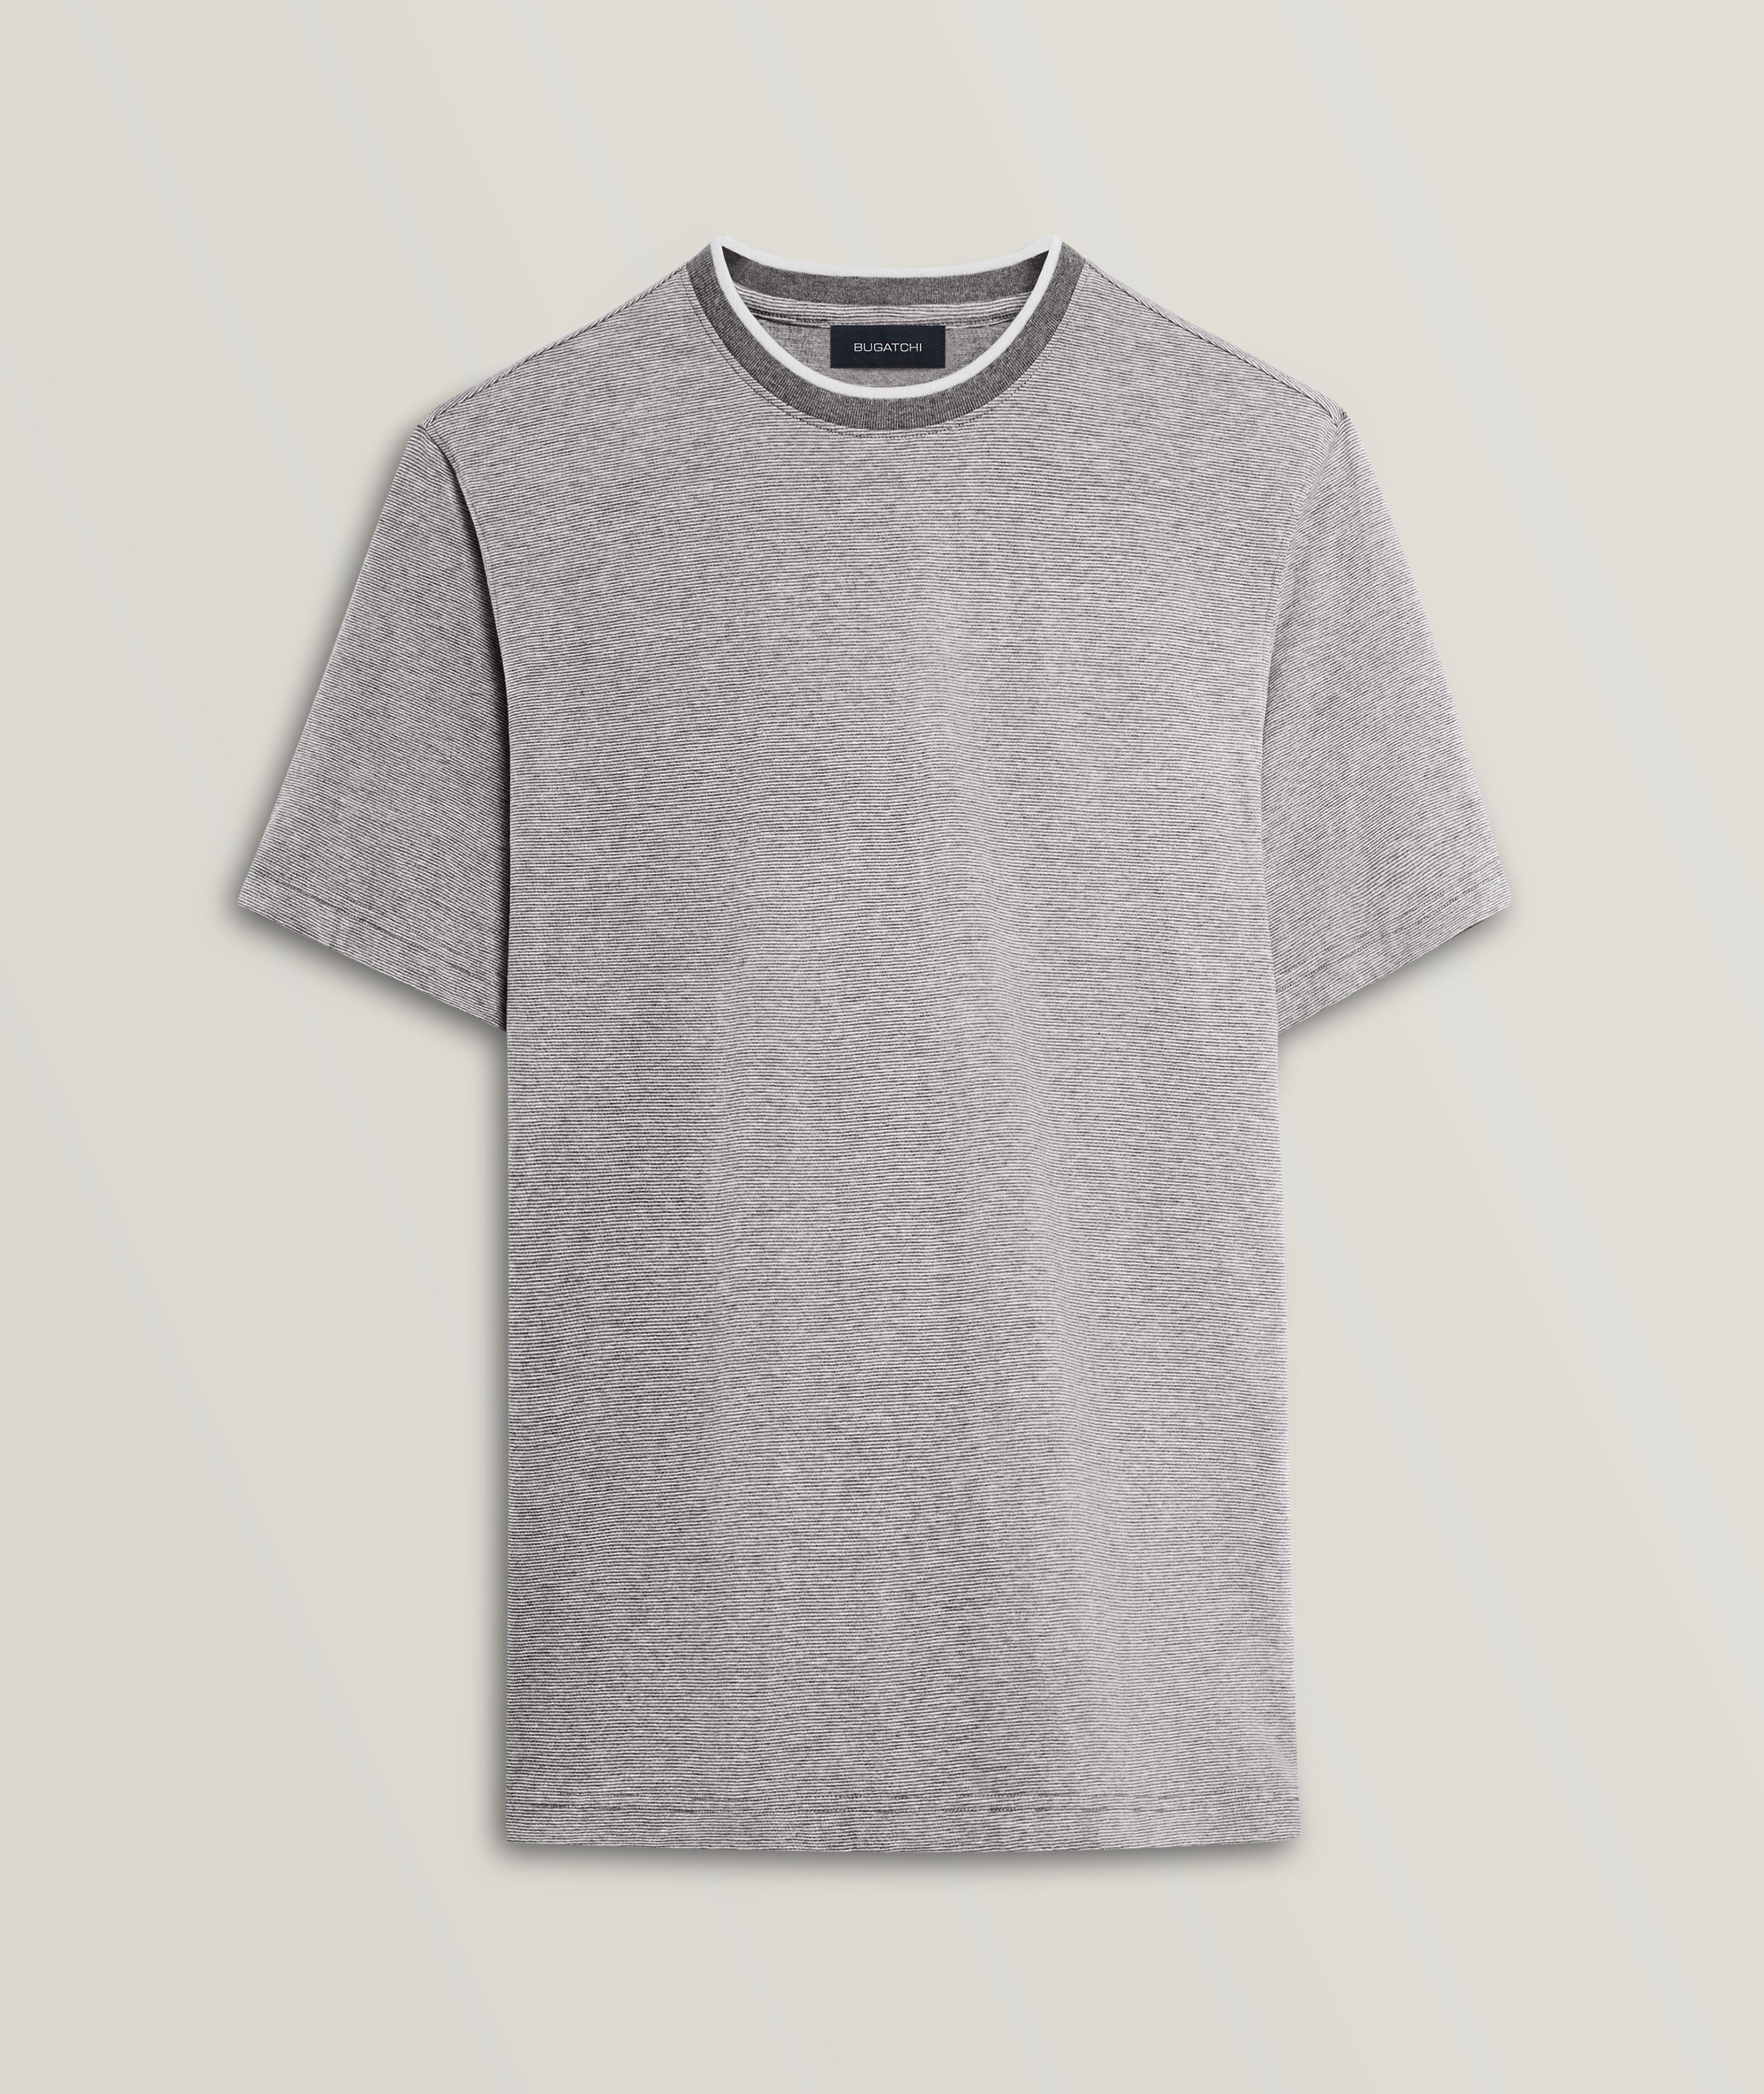 Pinstripe Cotton T-Shirt image 0